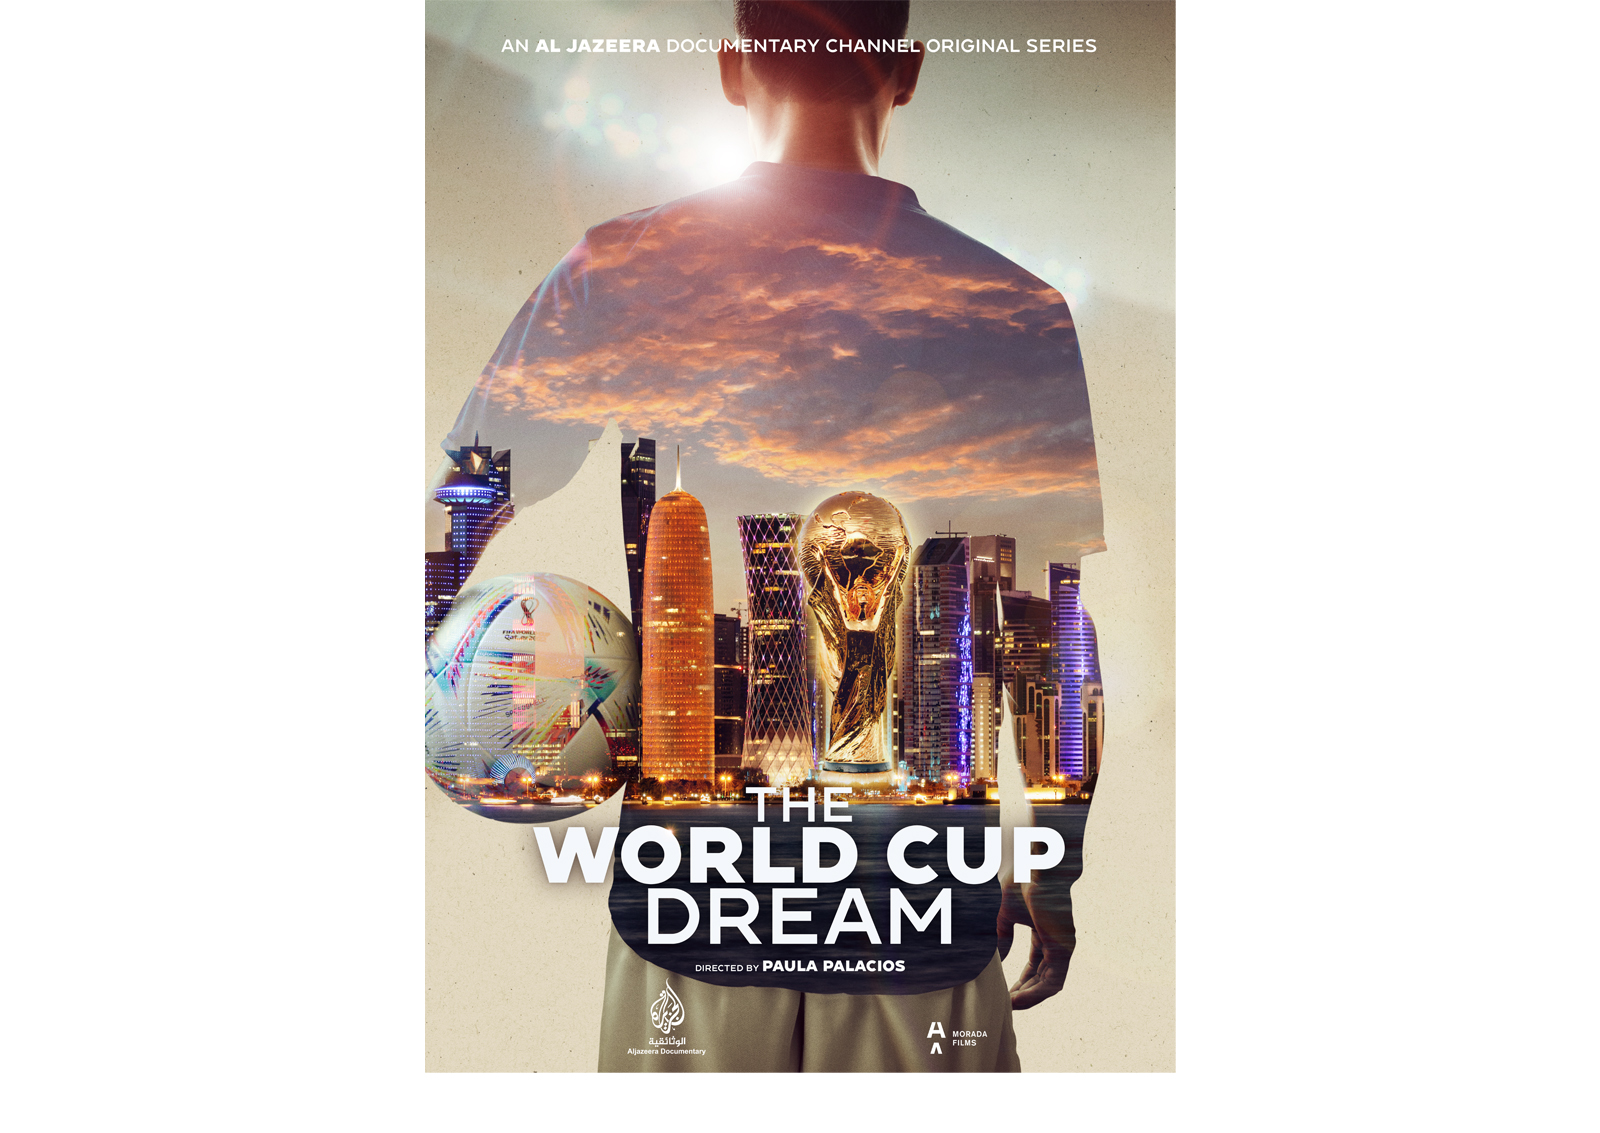 Pedro Cabañas - Design - THE WORLD CUP DREAM